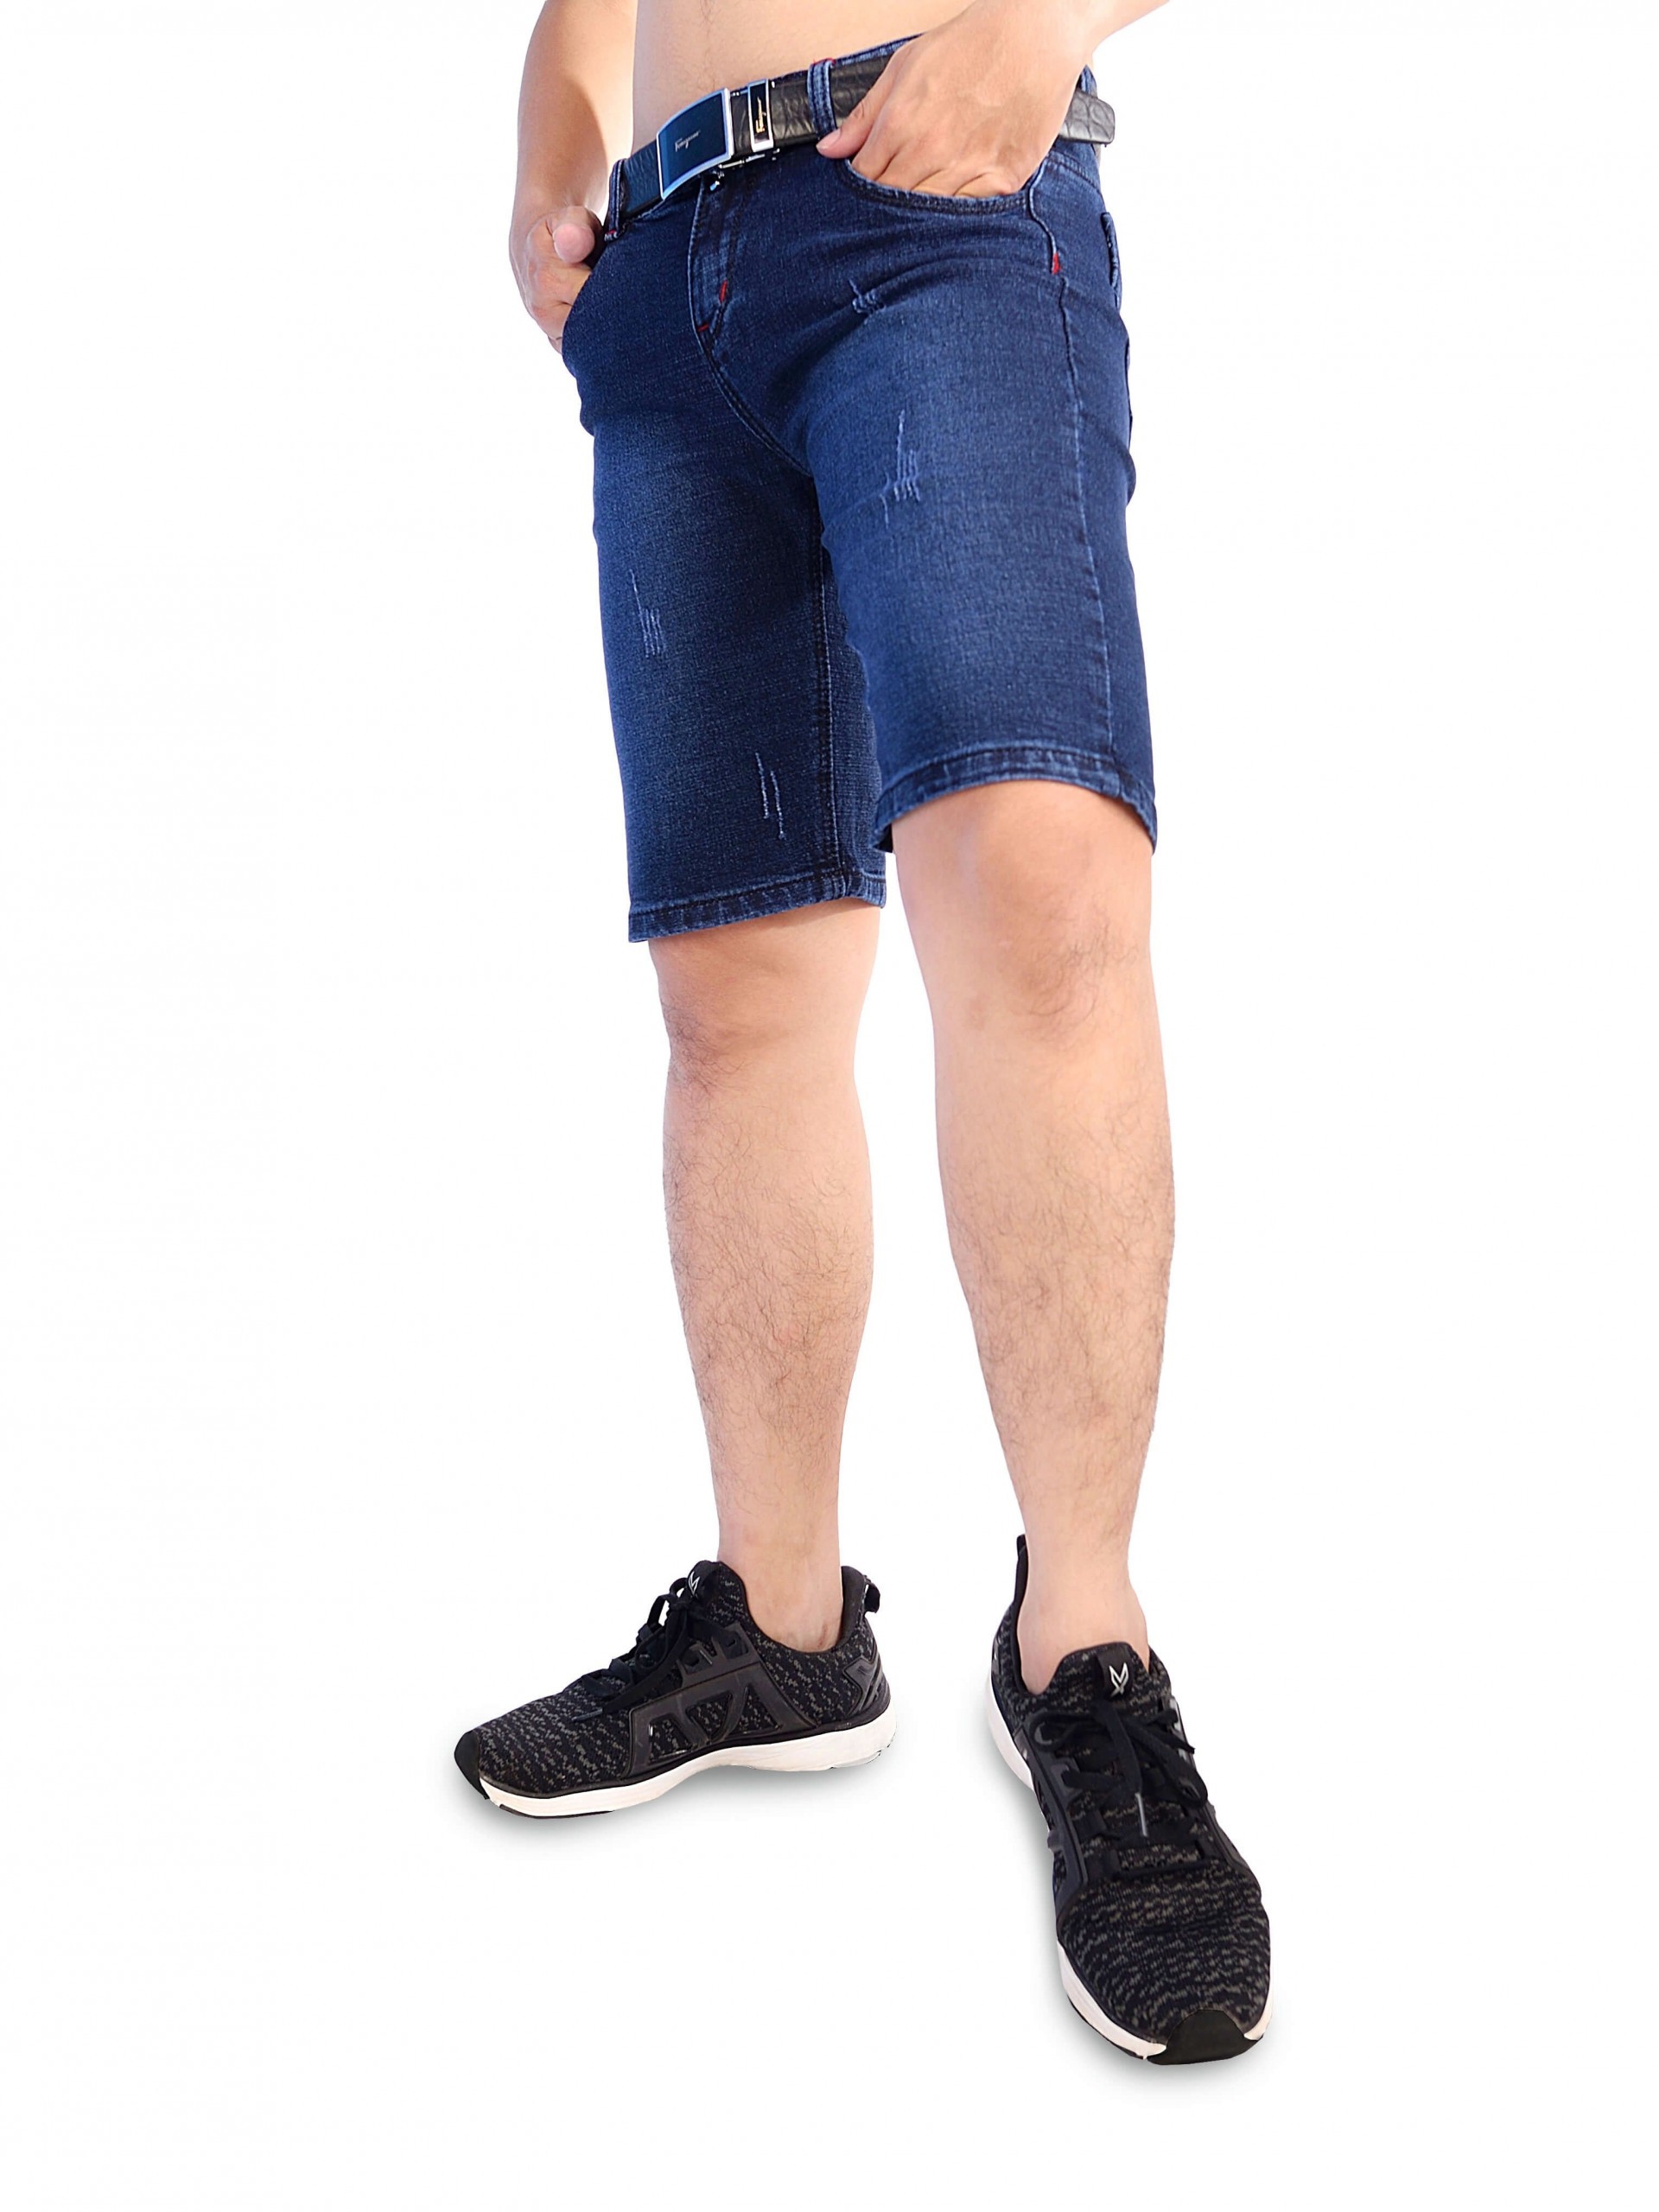 Quần short jeans - Mẫu quần không bao giờ hết hot